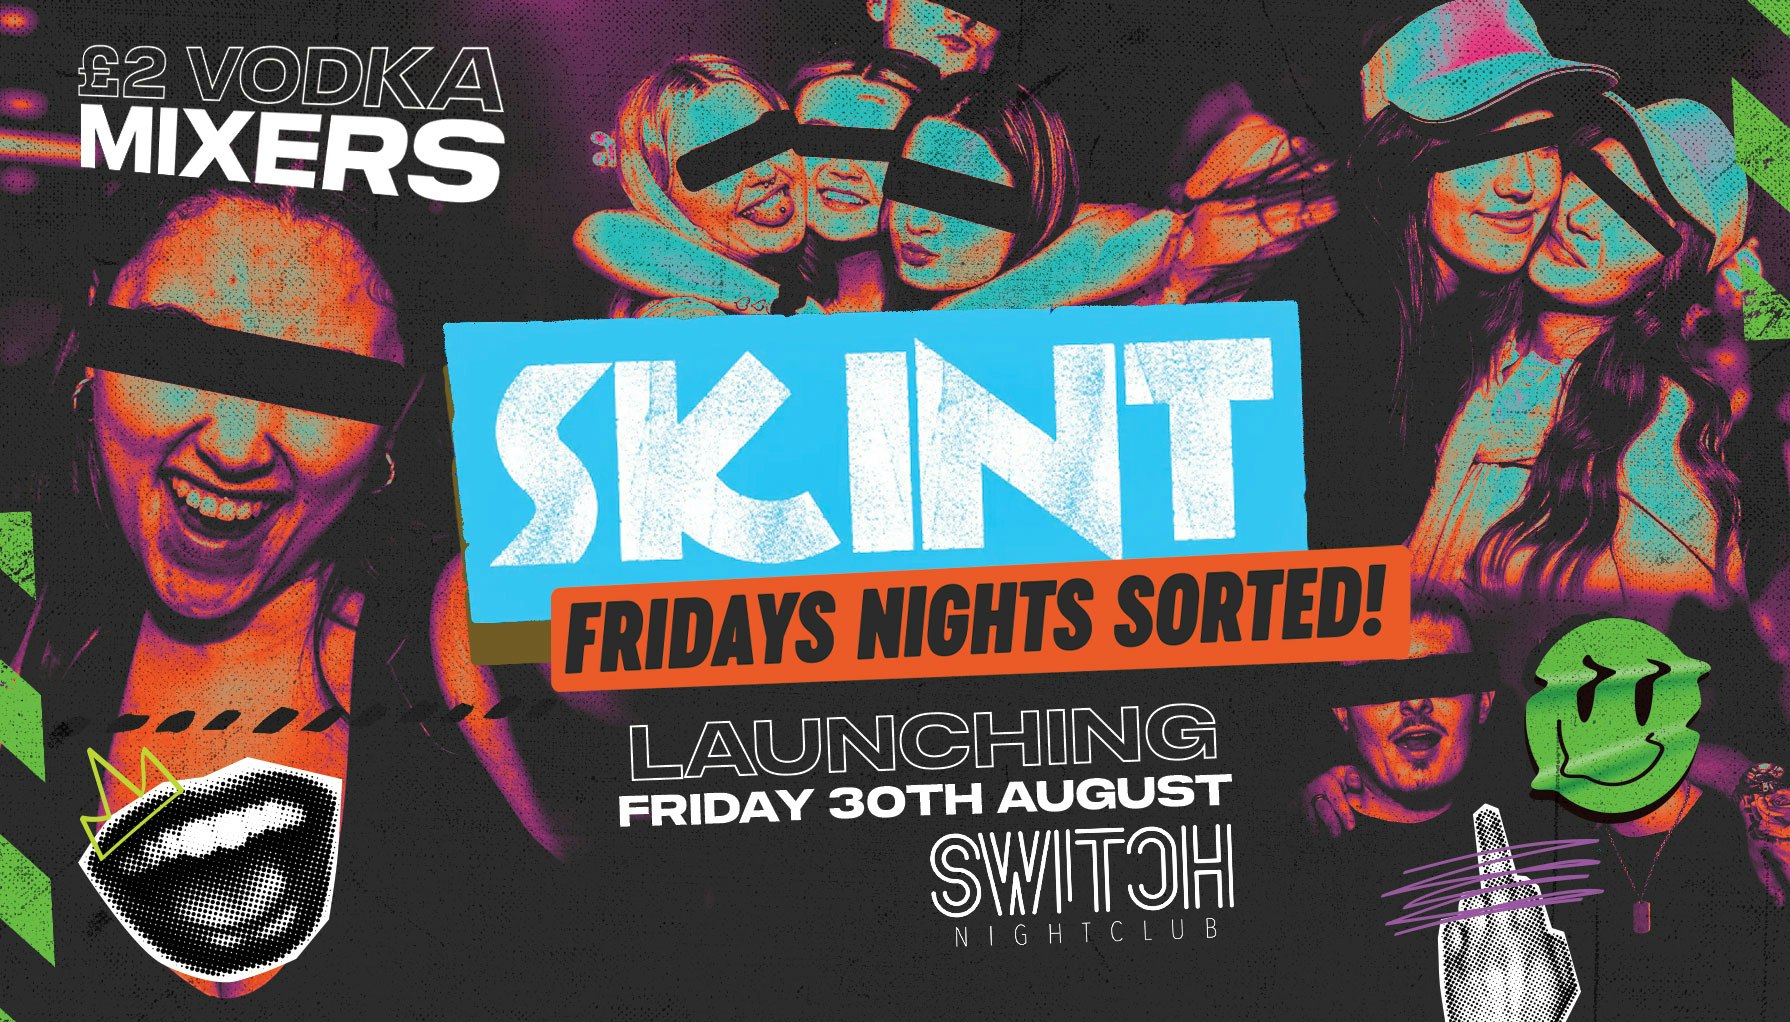 Switch Nightclub | Launch Friday | SKINT! £2 VODKA MIXER All Night + FREE ENTRY